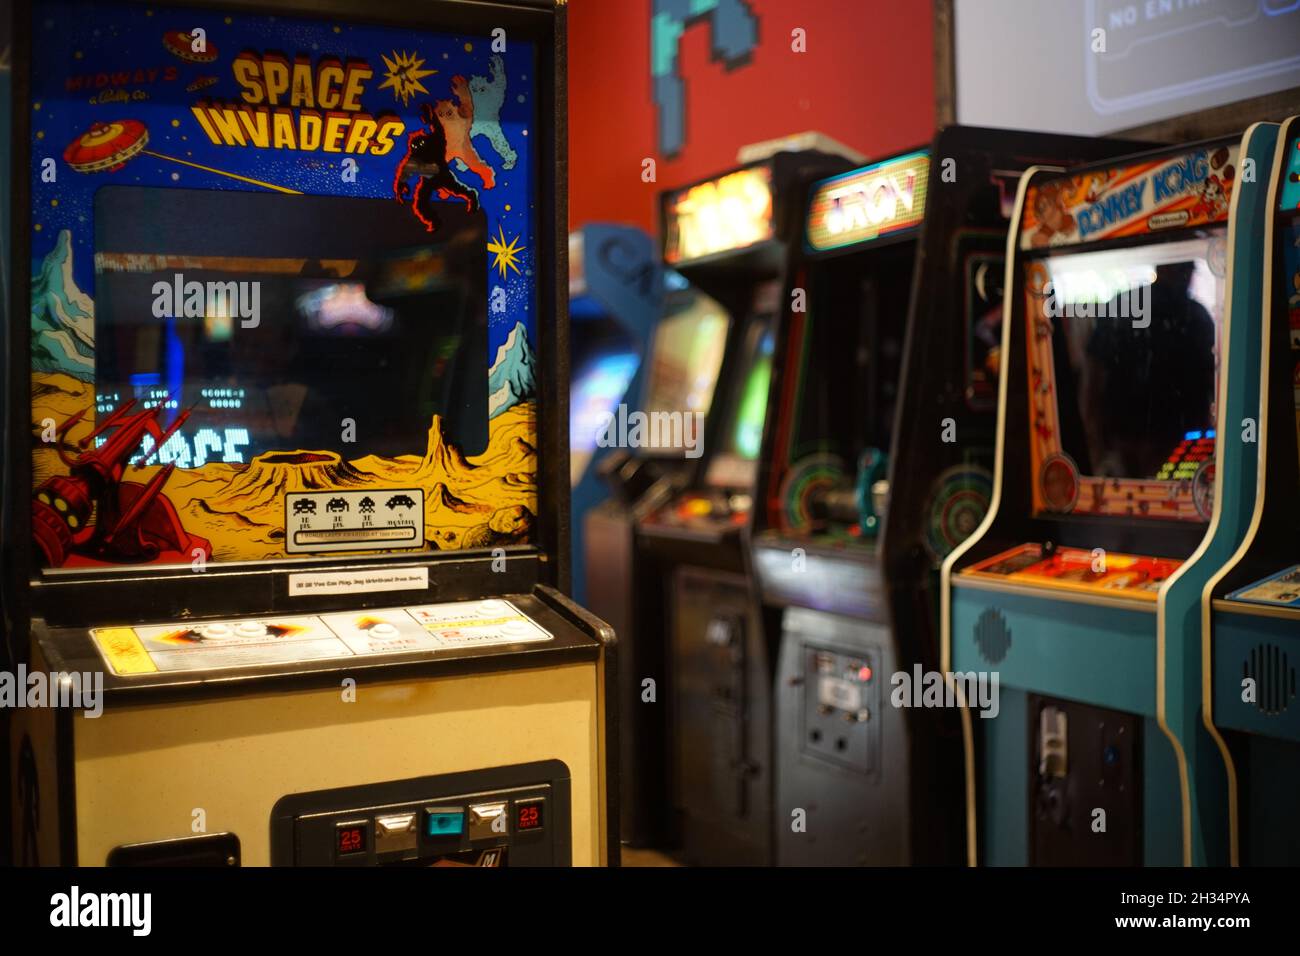 KANSAS CITY, UNITED STATES - Aug 03, 2016: Old school arcade video games; Atari space invaders, Kansas City, United States Stock Photo